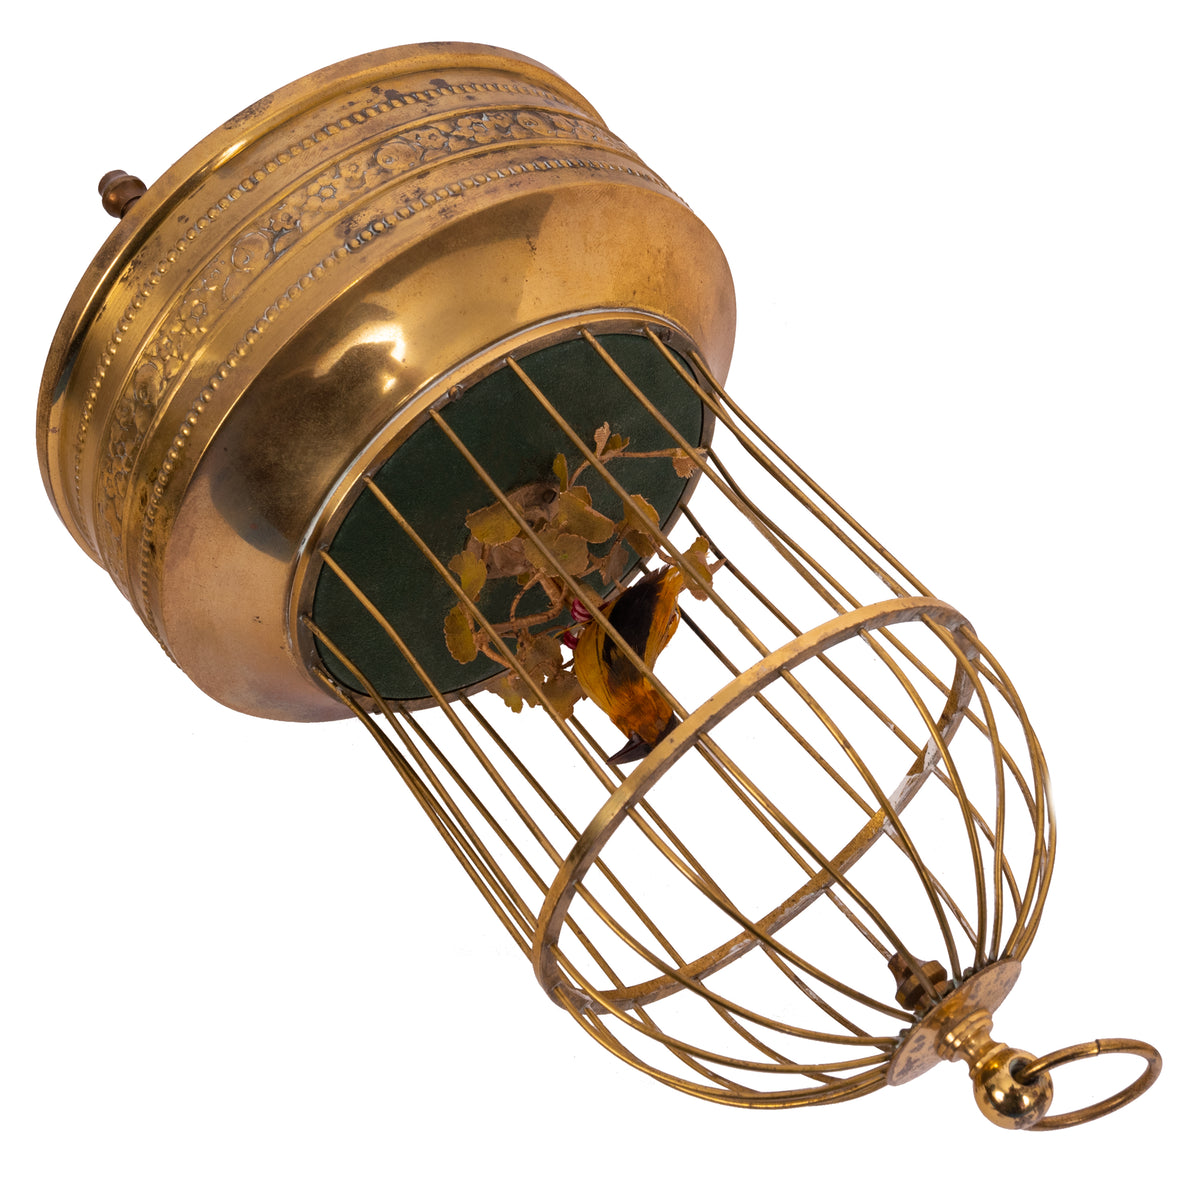 Antique German Singing Bird in a Cage Music Box Automaton Karl Griesbaum 1930